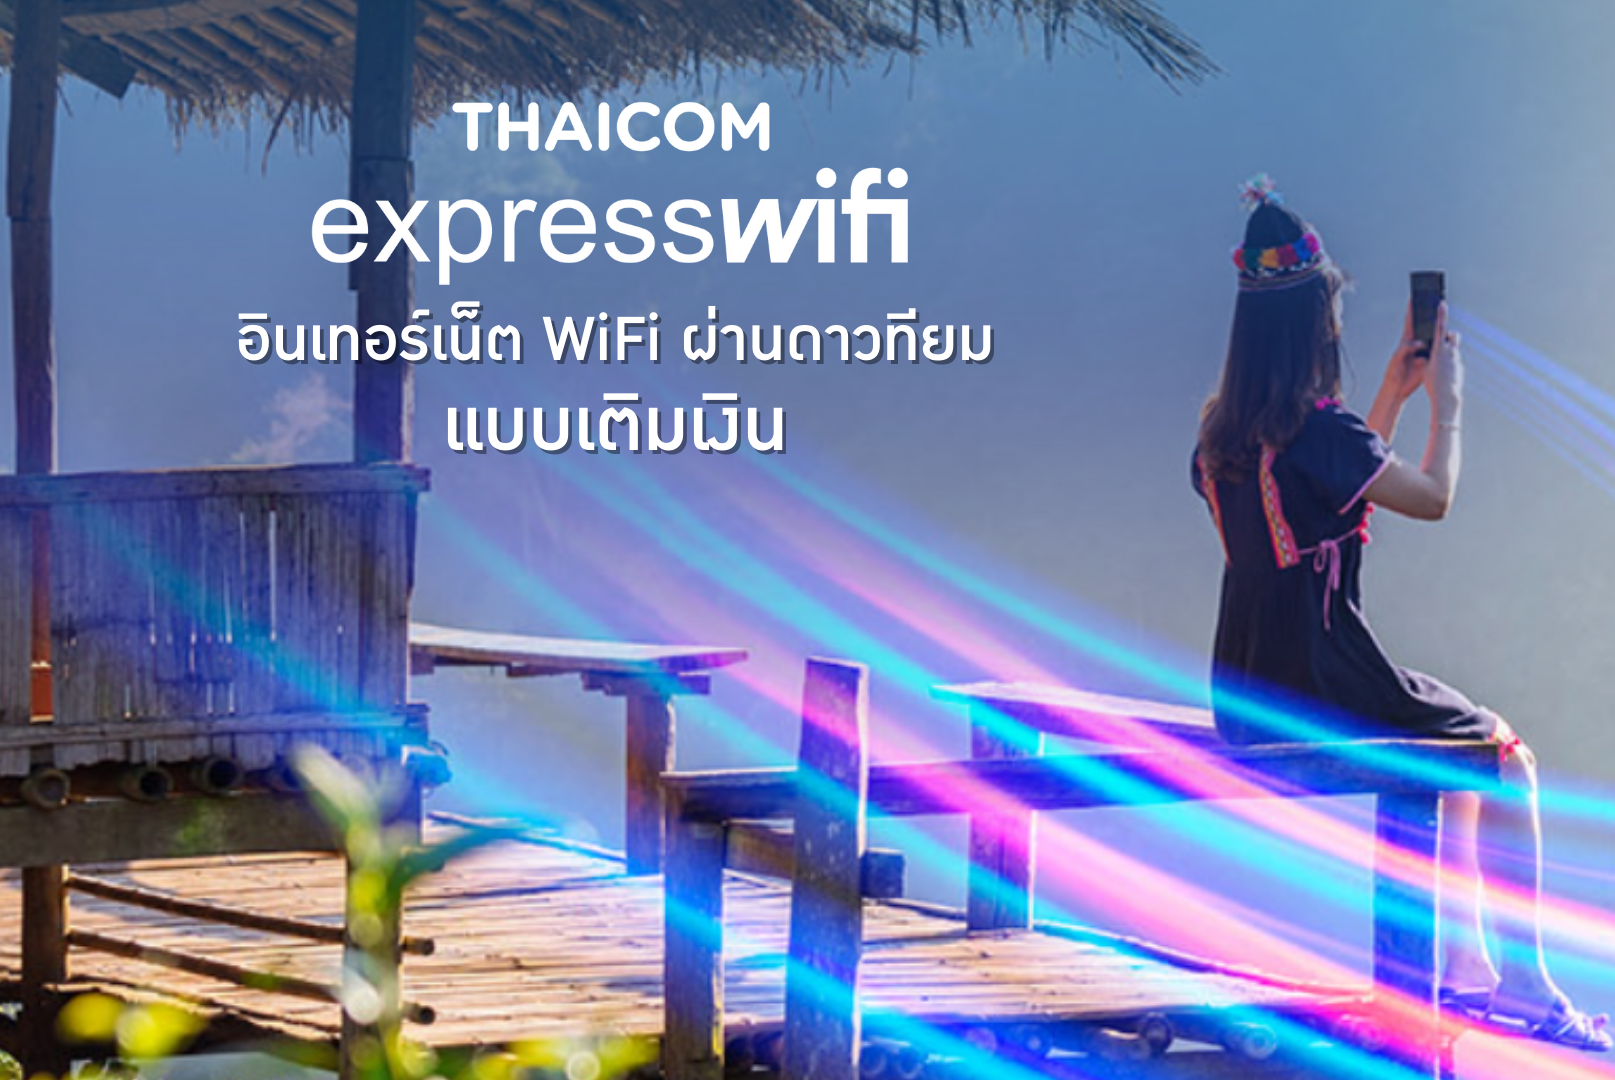 Thaicom Express WiFi